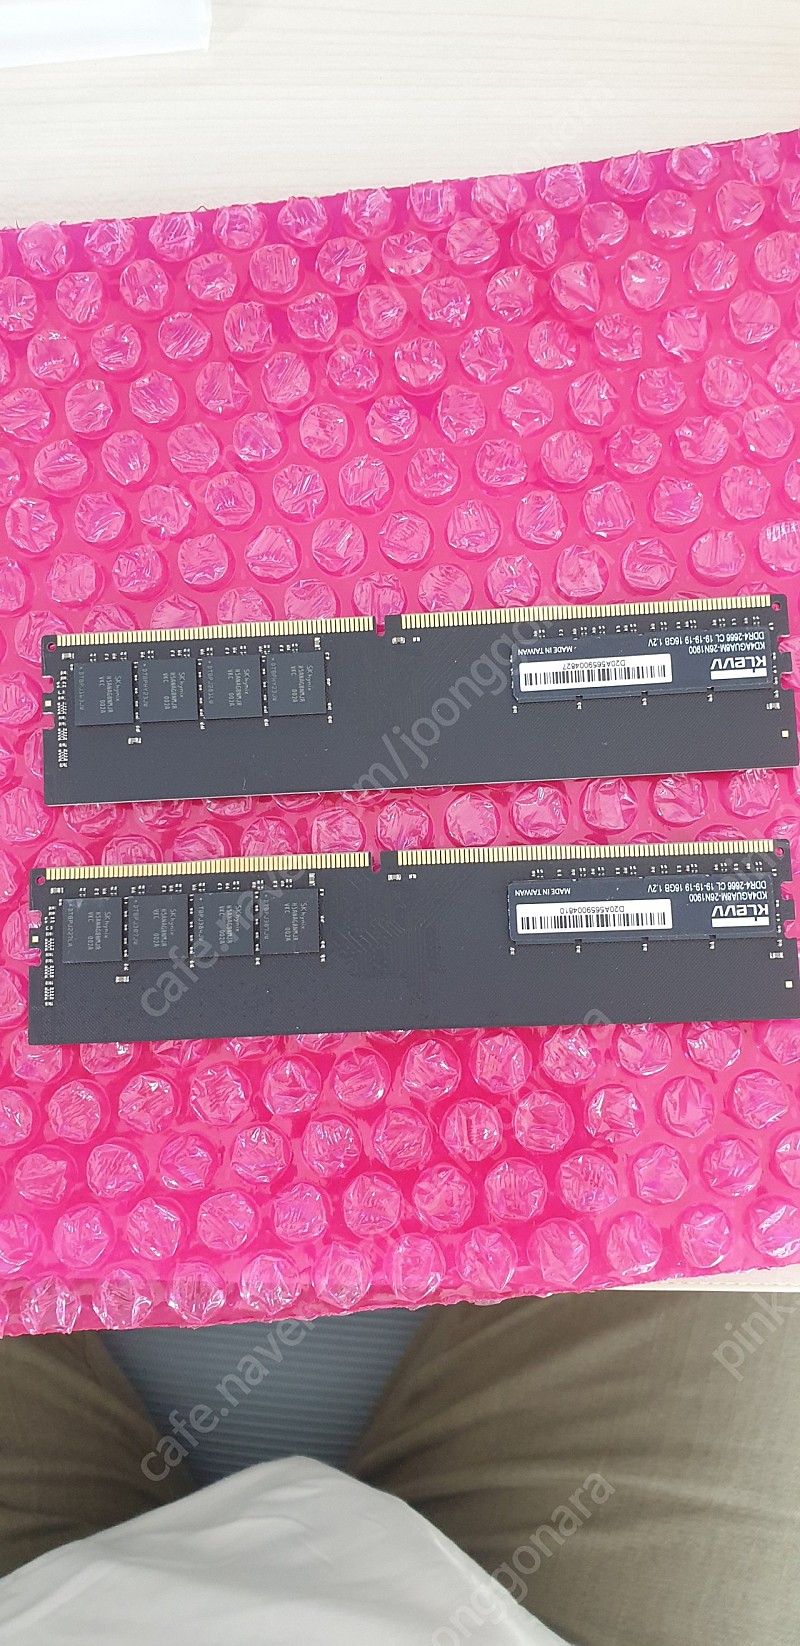 KLEVV 16기가 메모리 램(RAM) DDR4 2666mhz 2장